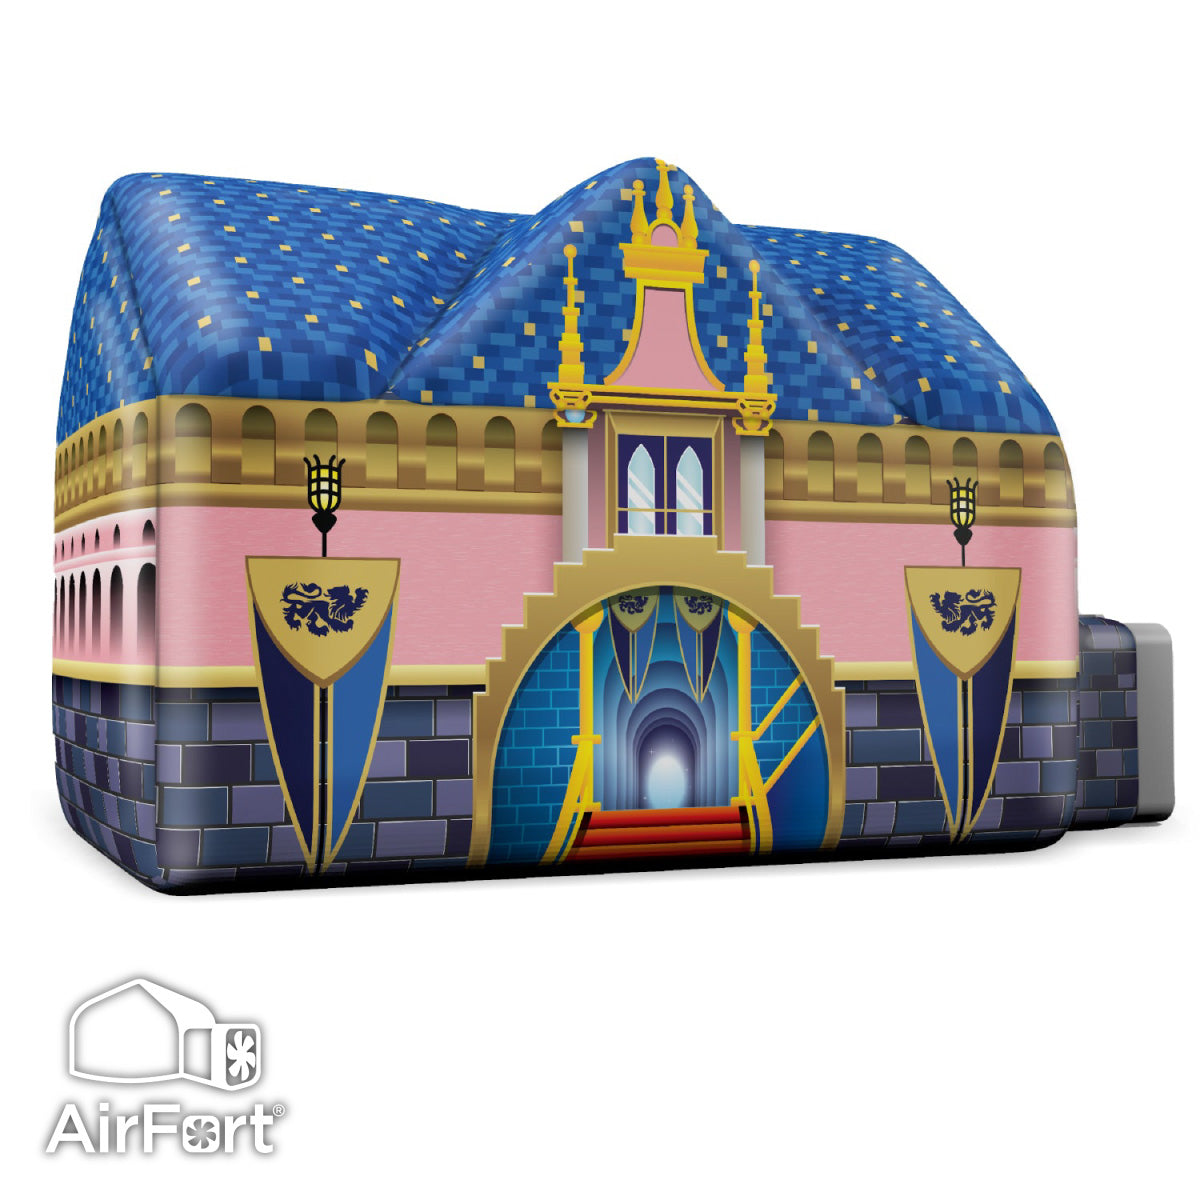 Airfort Royal Castle - Pink